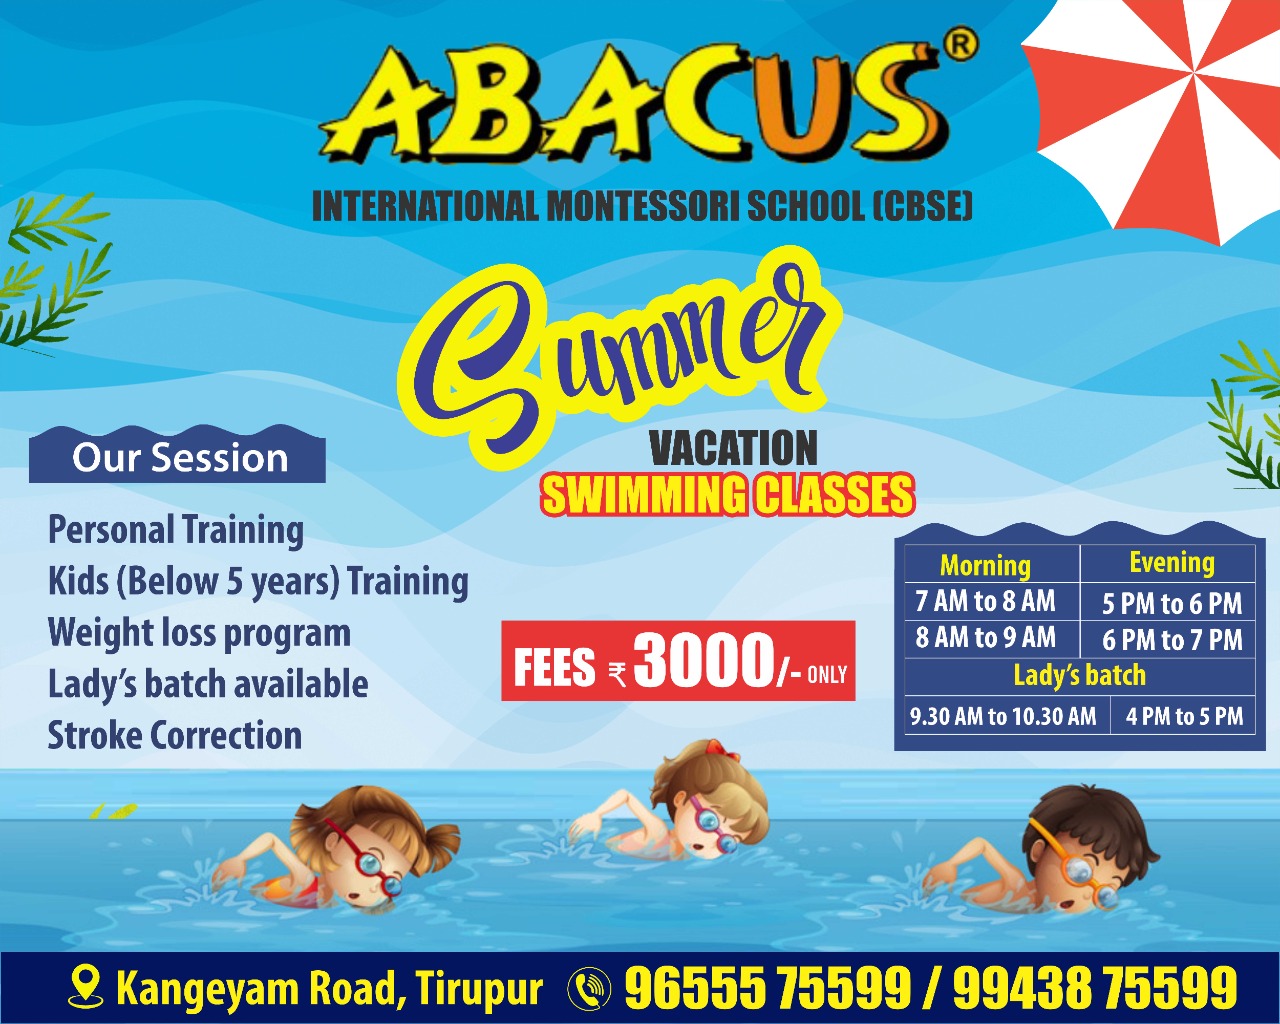 Swimming classes - SUMMER CAMP